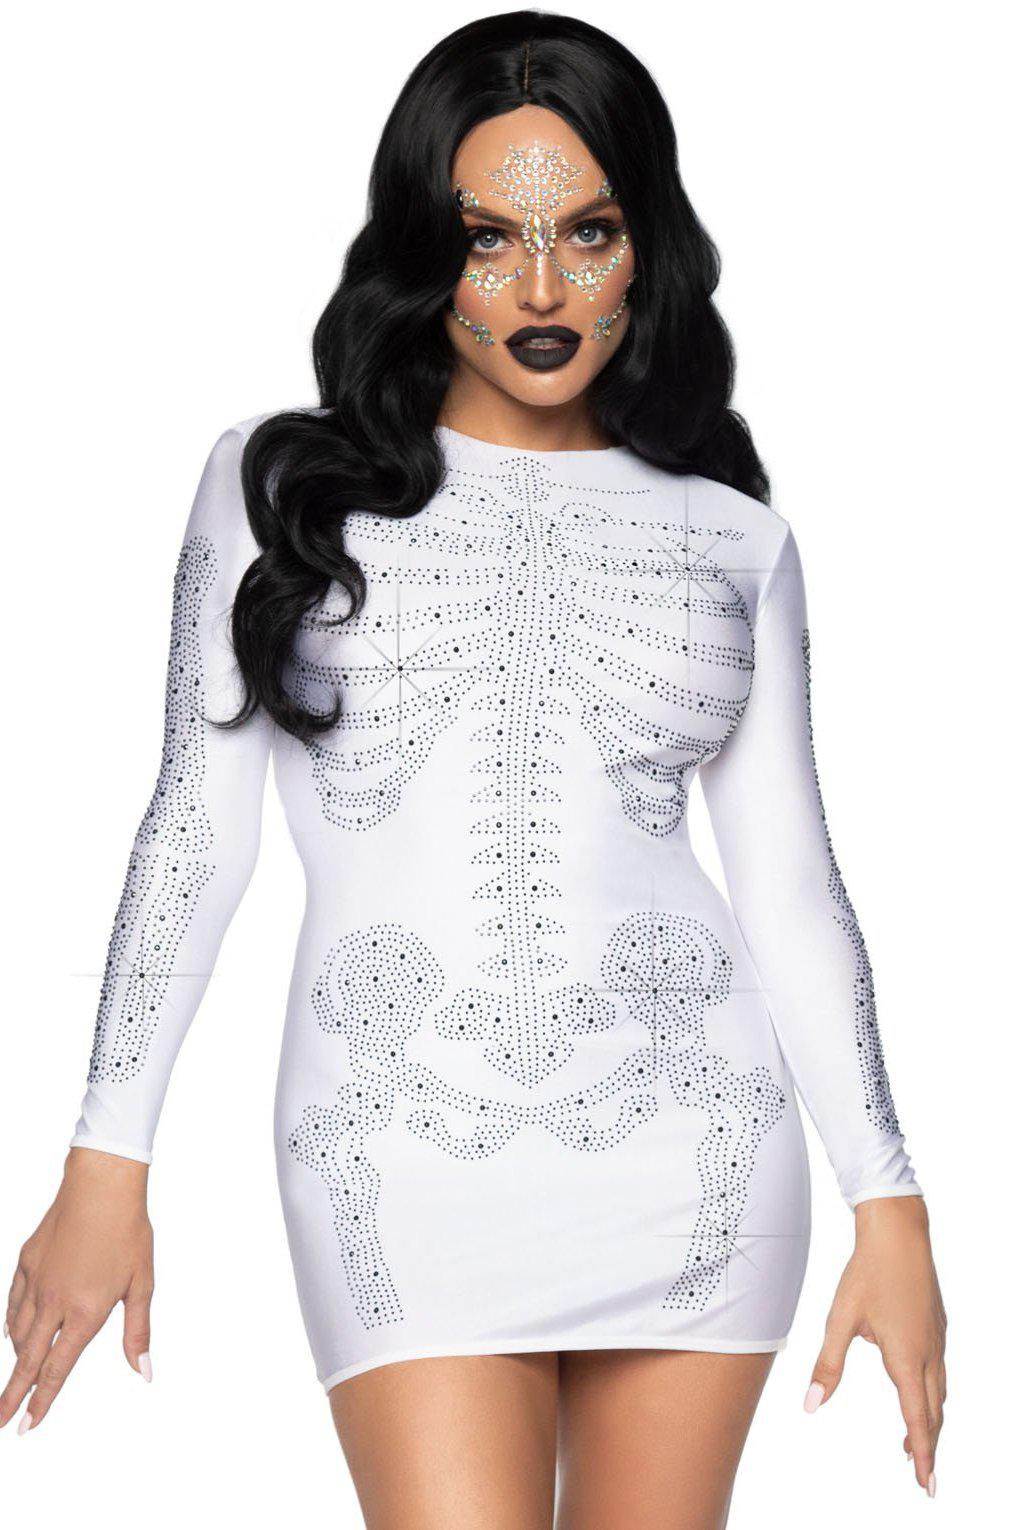 Rhinestone Spandex Skeleton Dress-Other Costumes-Leg Avenue-White-S-SEXYSHOES.COM